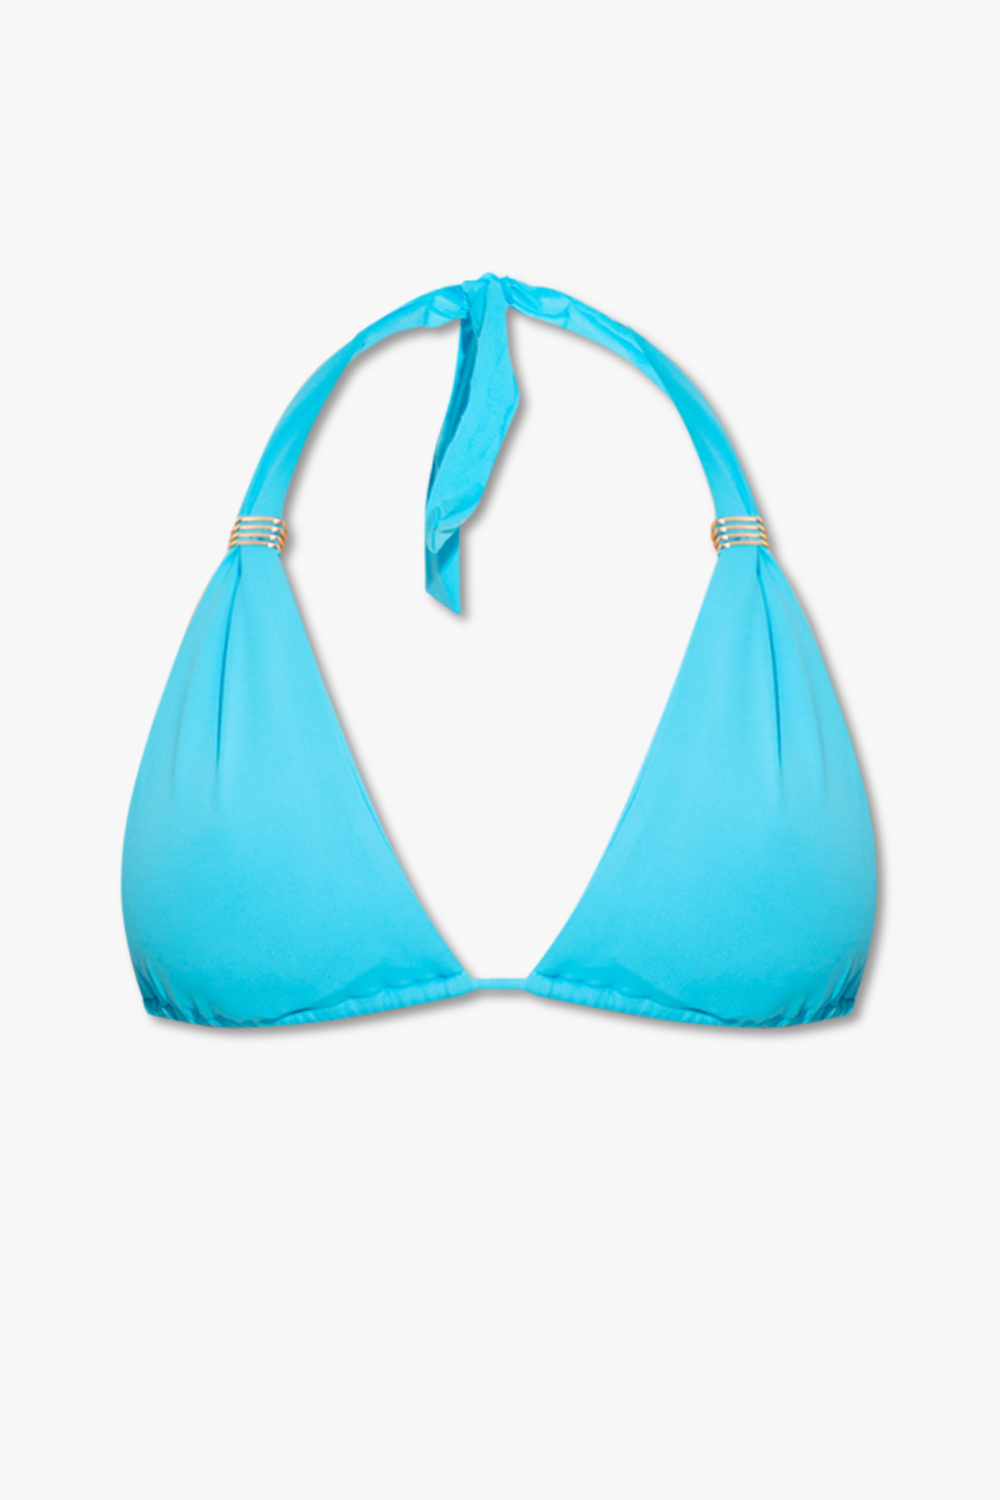 Blue ‘Grenada’ swimsuit top Melissa Odabash - Vitkac Germany